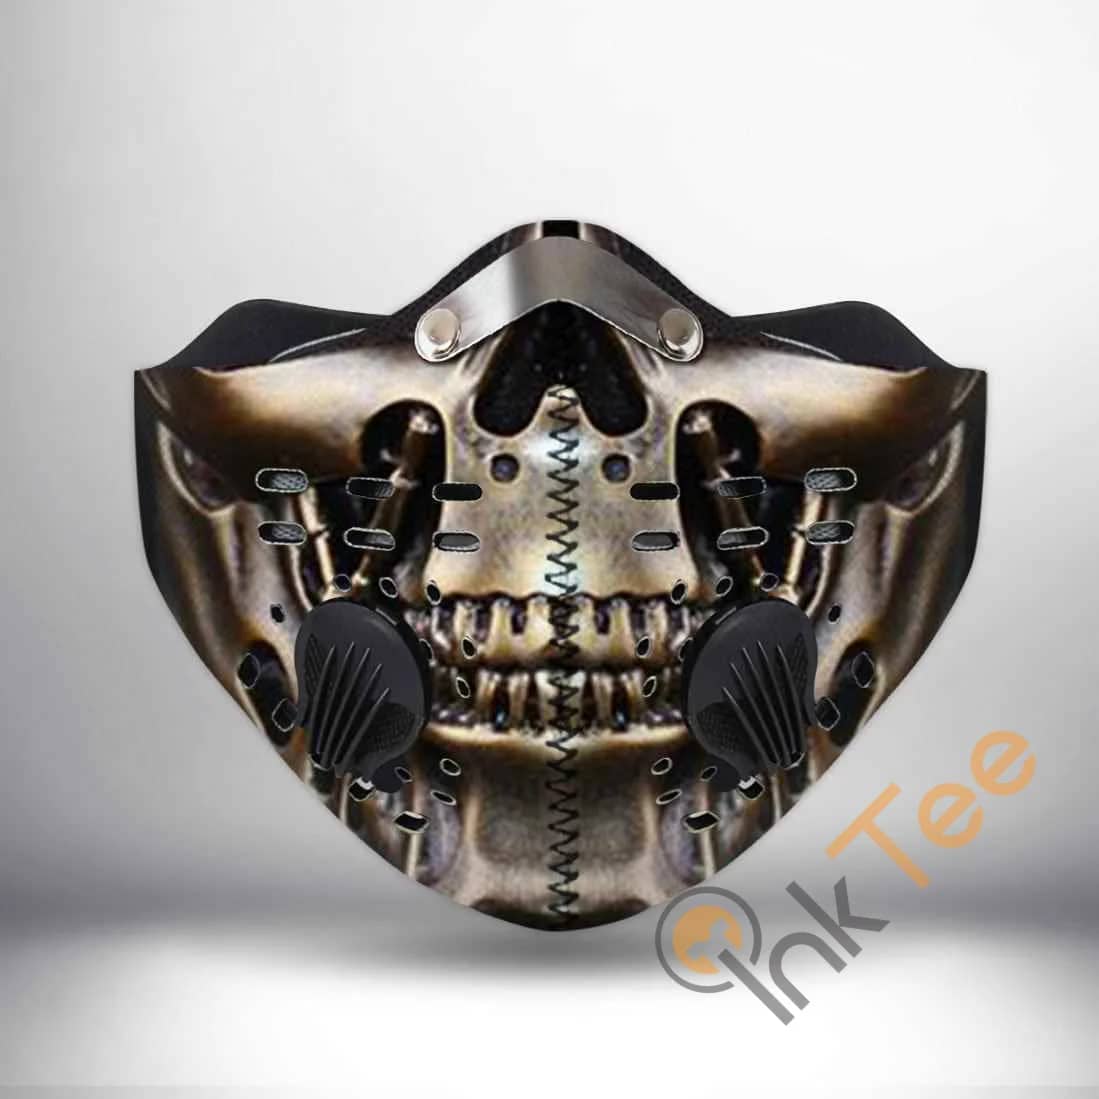 Skull Filter Activated Carbon Pm 2.5 Fm Sku 431 Face Mask